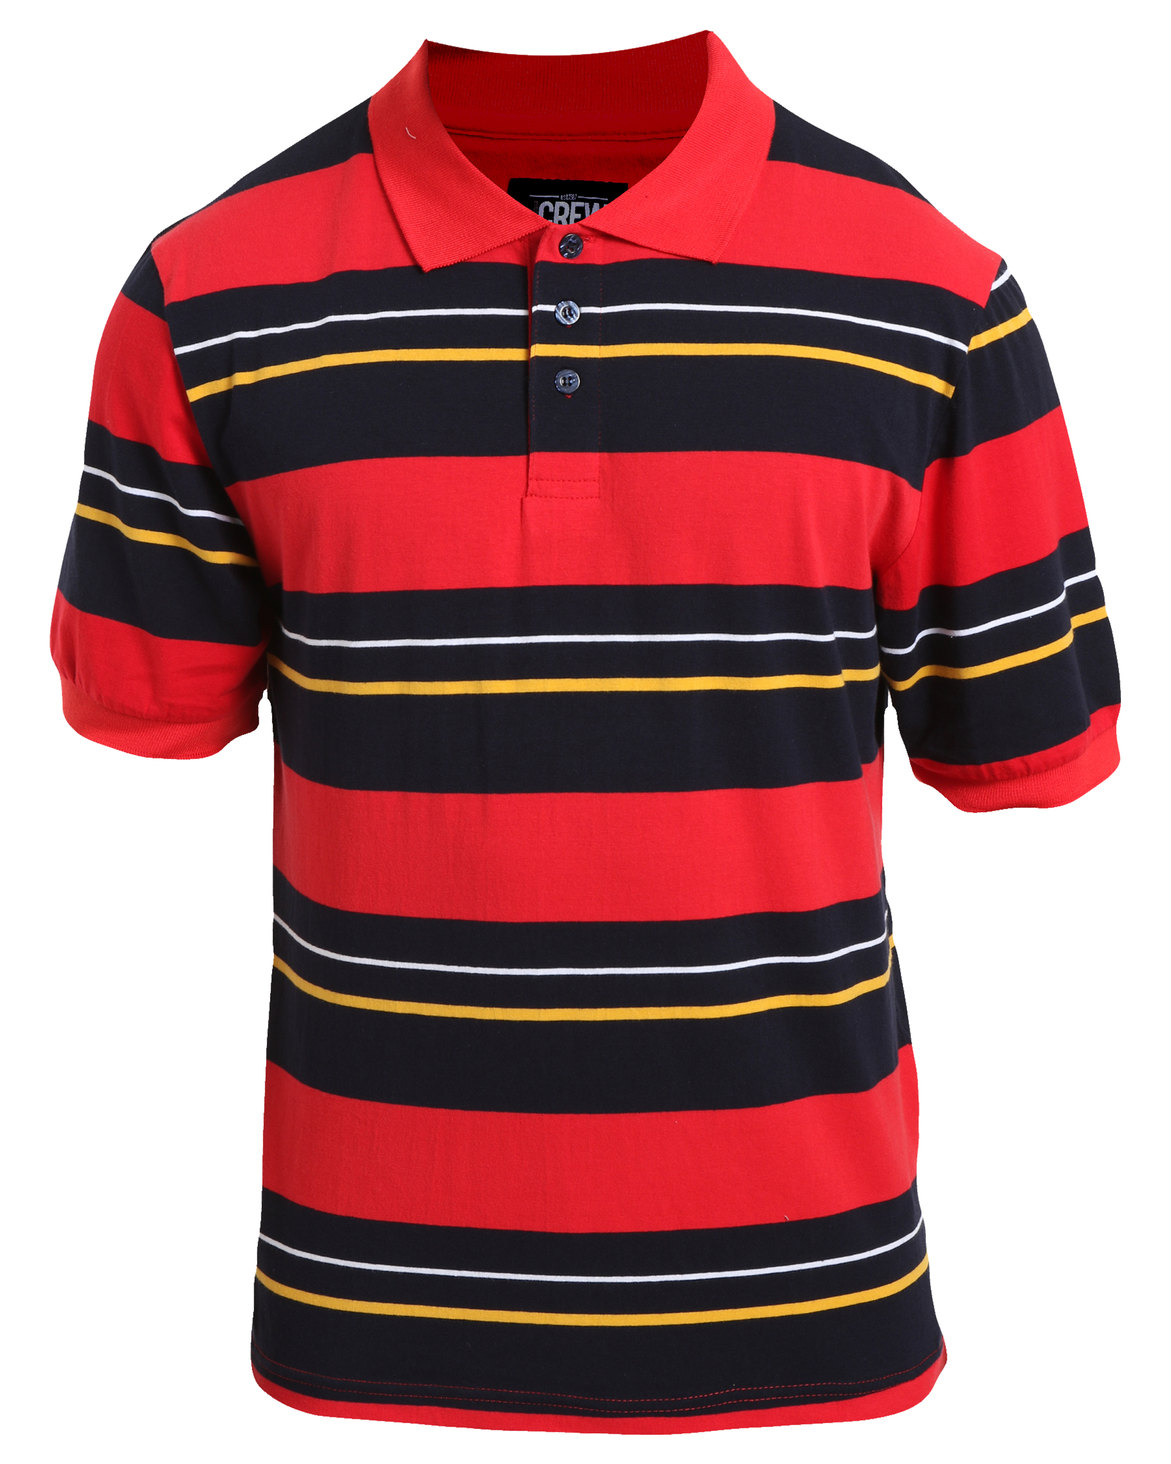 JCrew Stripe Golf Shirt Red/Navy | Zando